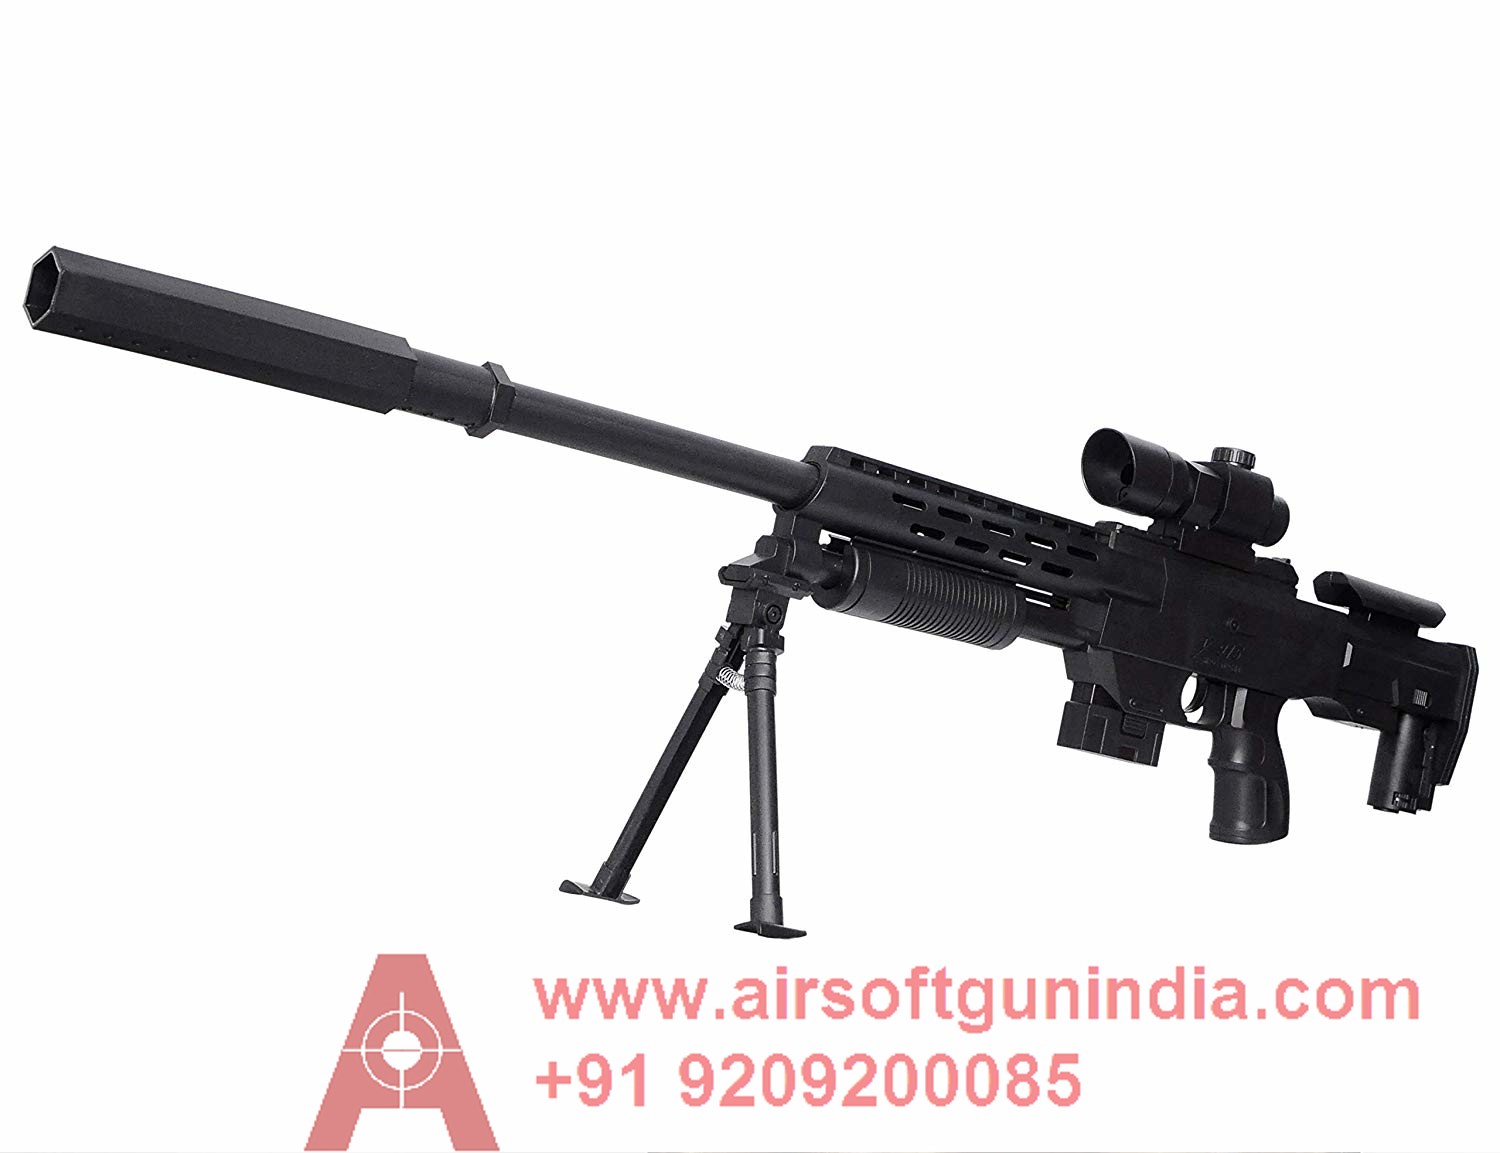 TS12 Airsoft Sniper Rifle By Airsoft Gun India